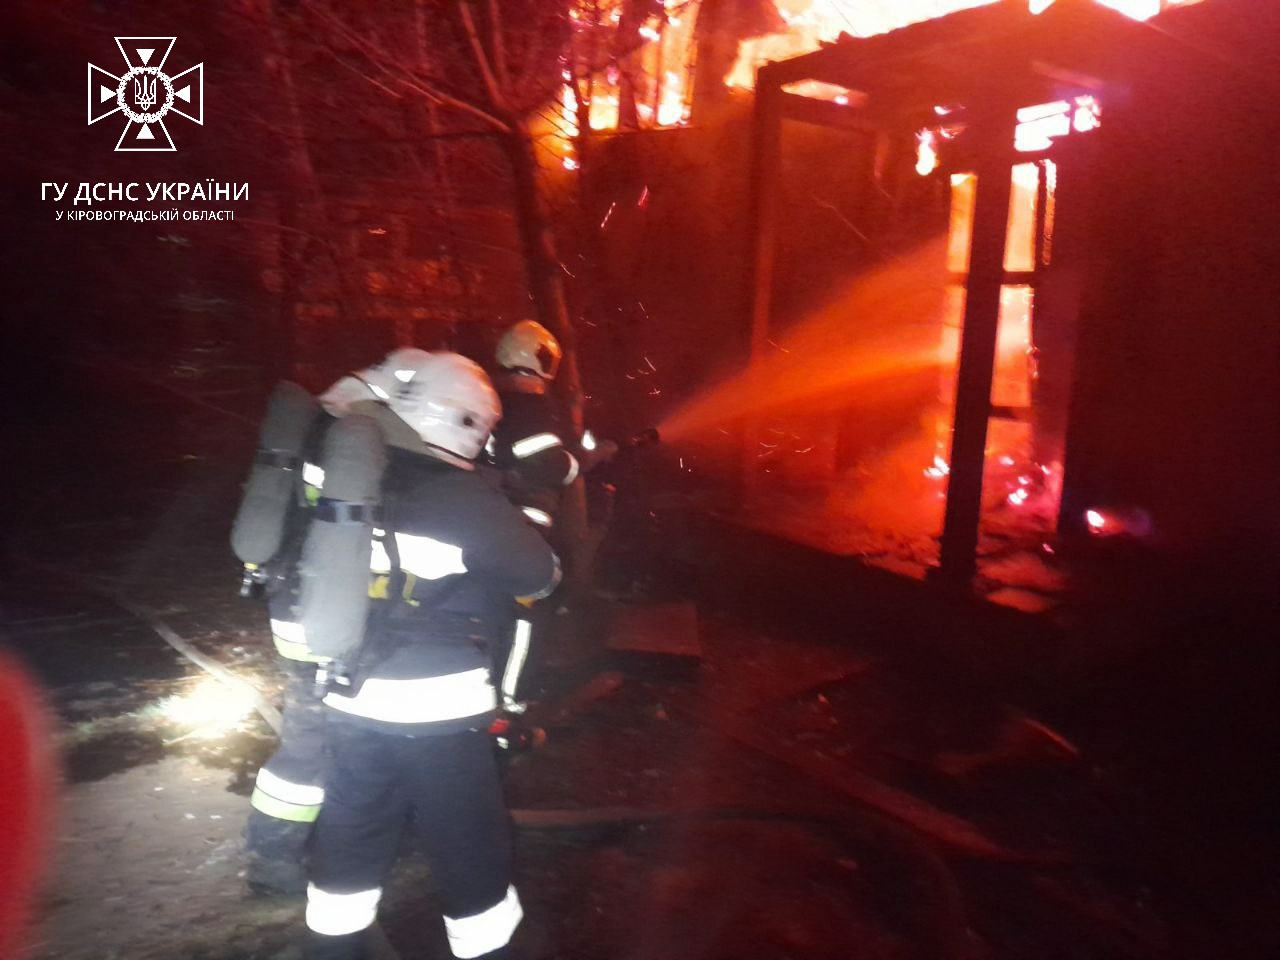 Двi пожежi гасили вогнеборцi Кiровоградщини